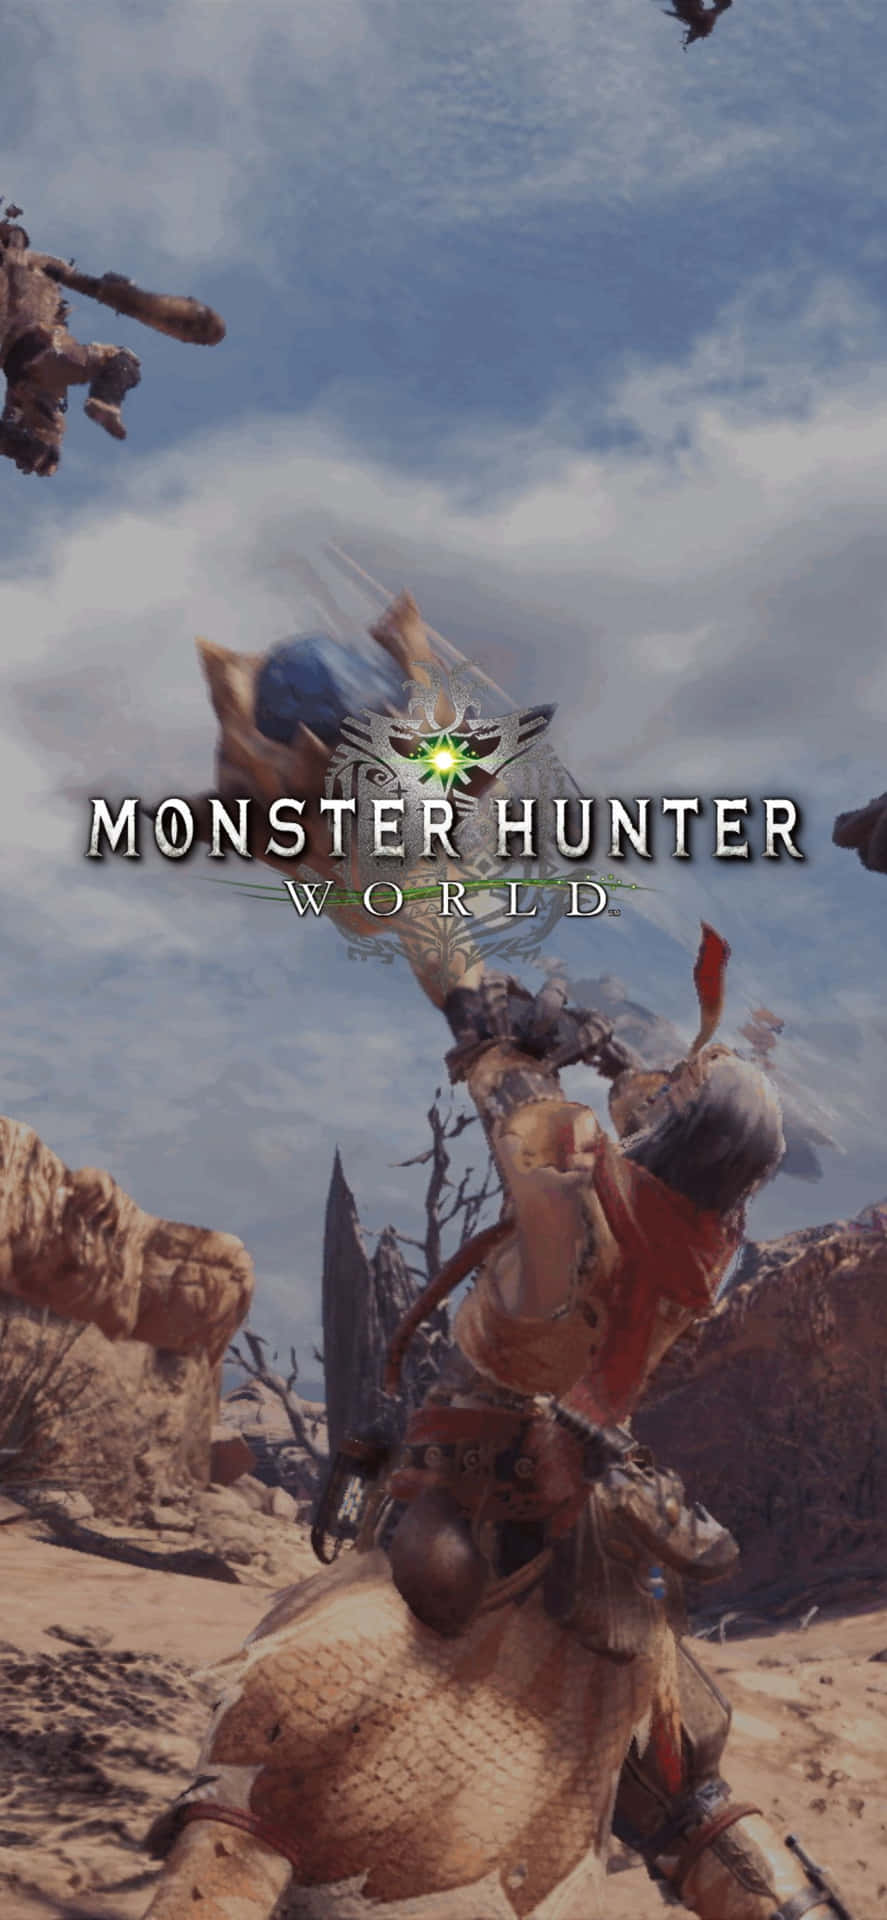 Iphonexs Max Bakgrundsbild Med Monster Hunter World-tema.